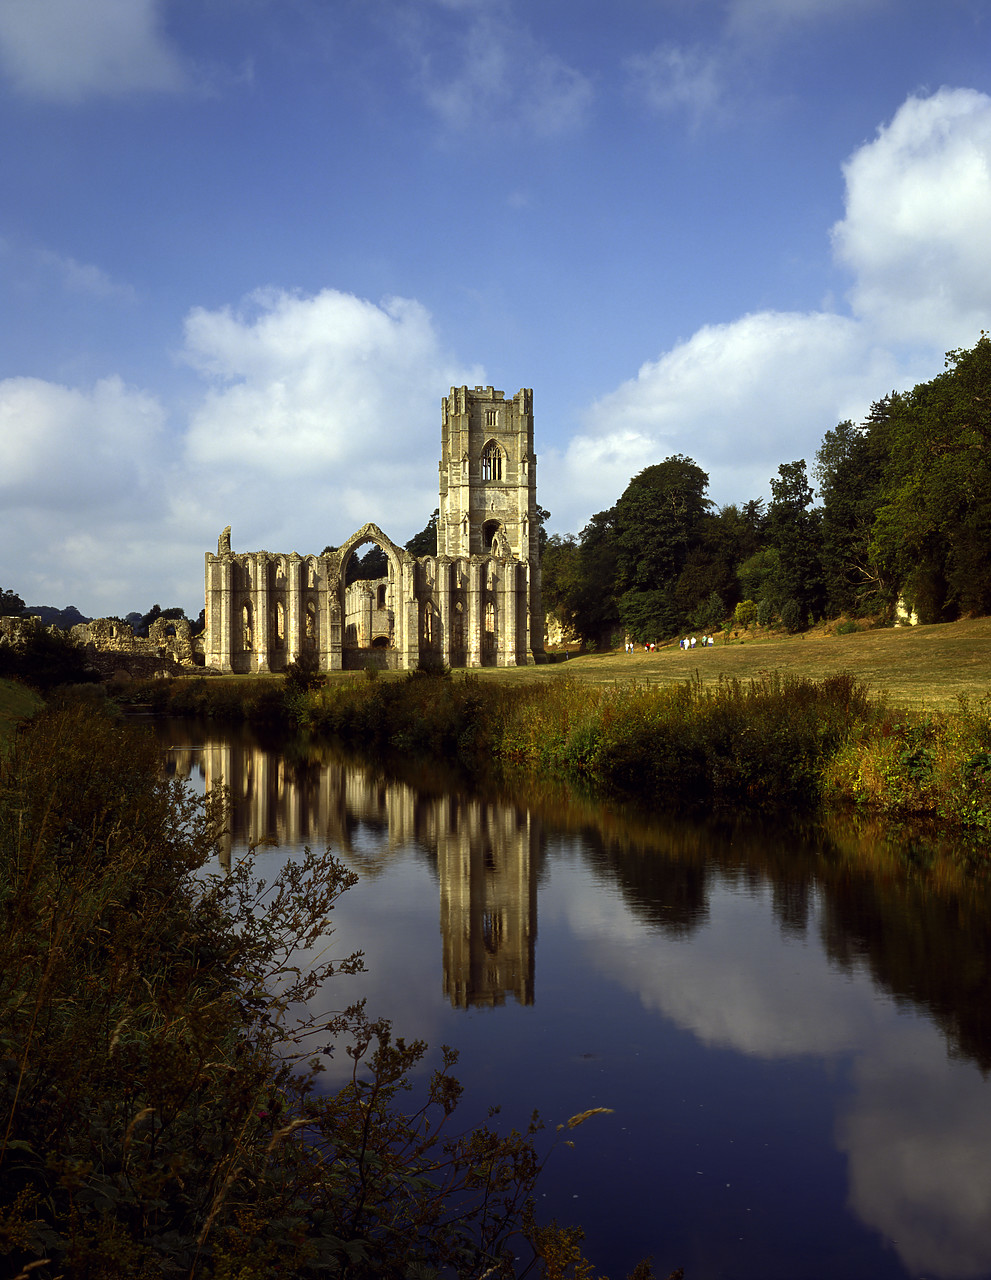 #913678-2 - Fountains Abbey, near Ripon, North Yorkshire, England